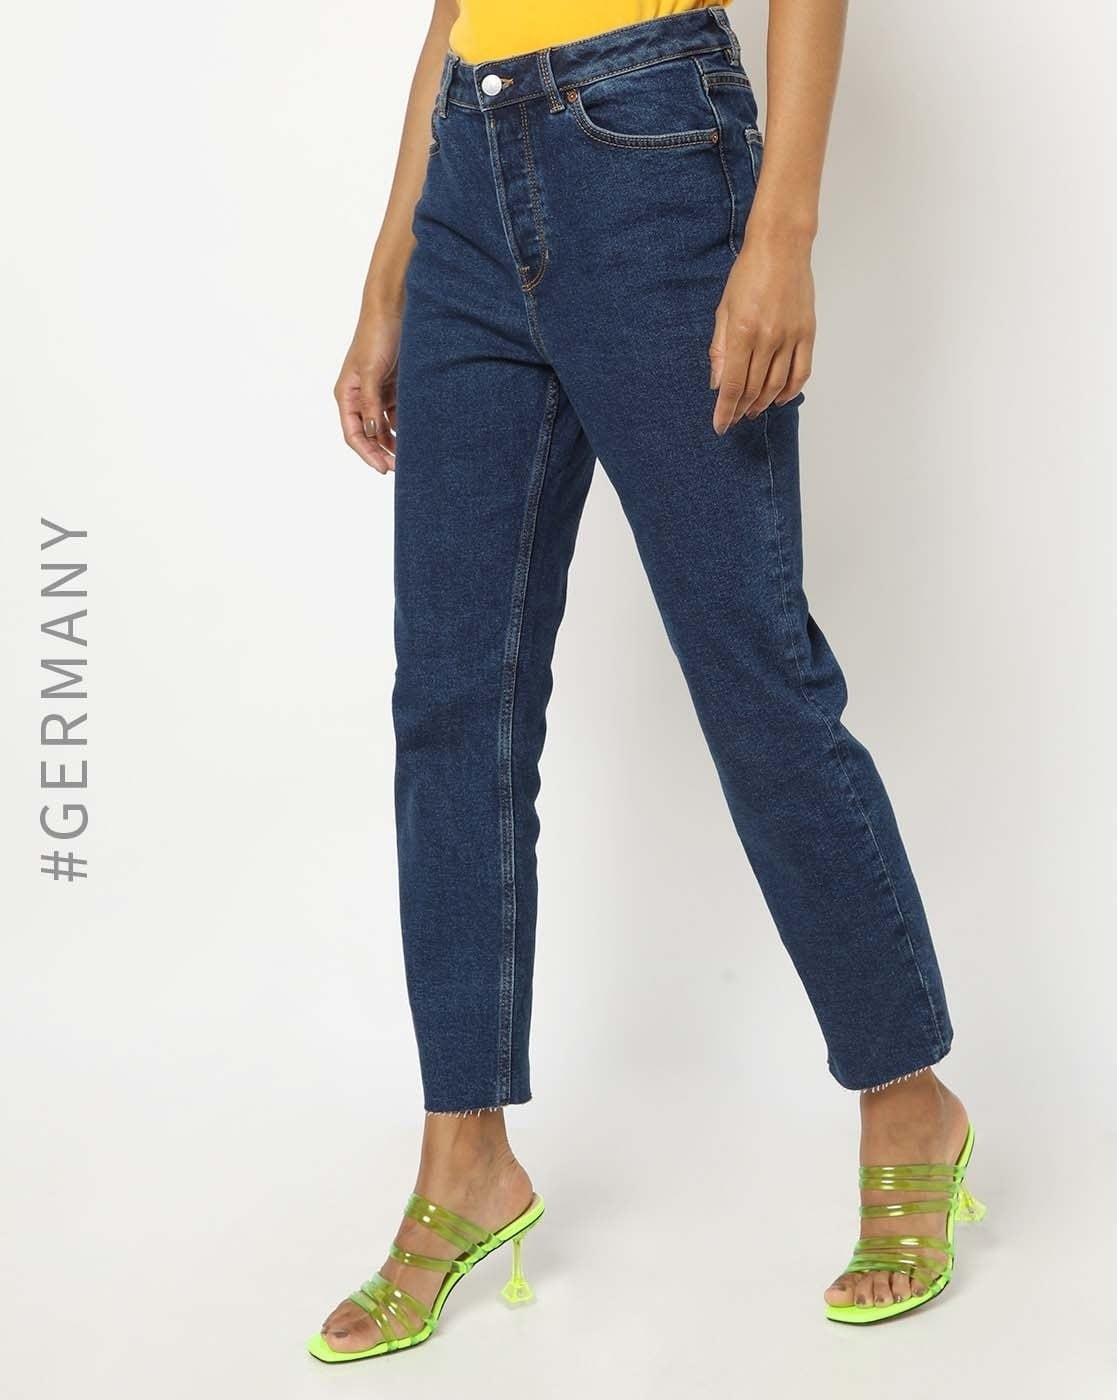 for Jeggings Blue Women Buy by Jeans Tailor Tom & Online